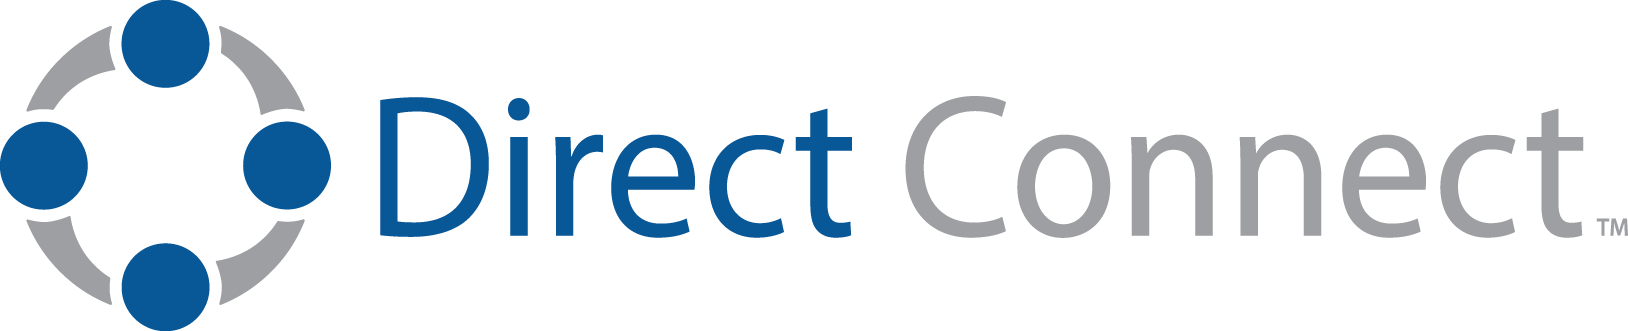 Ипка коннект. Direct connect. Direct connect лого. Direct service лого. Clearbit connect лого.